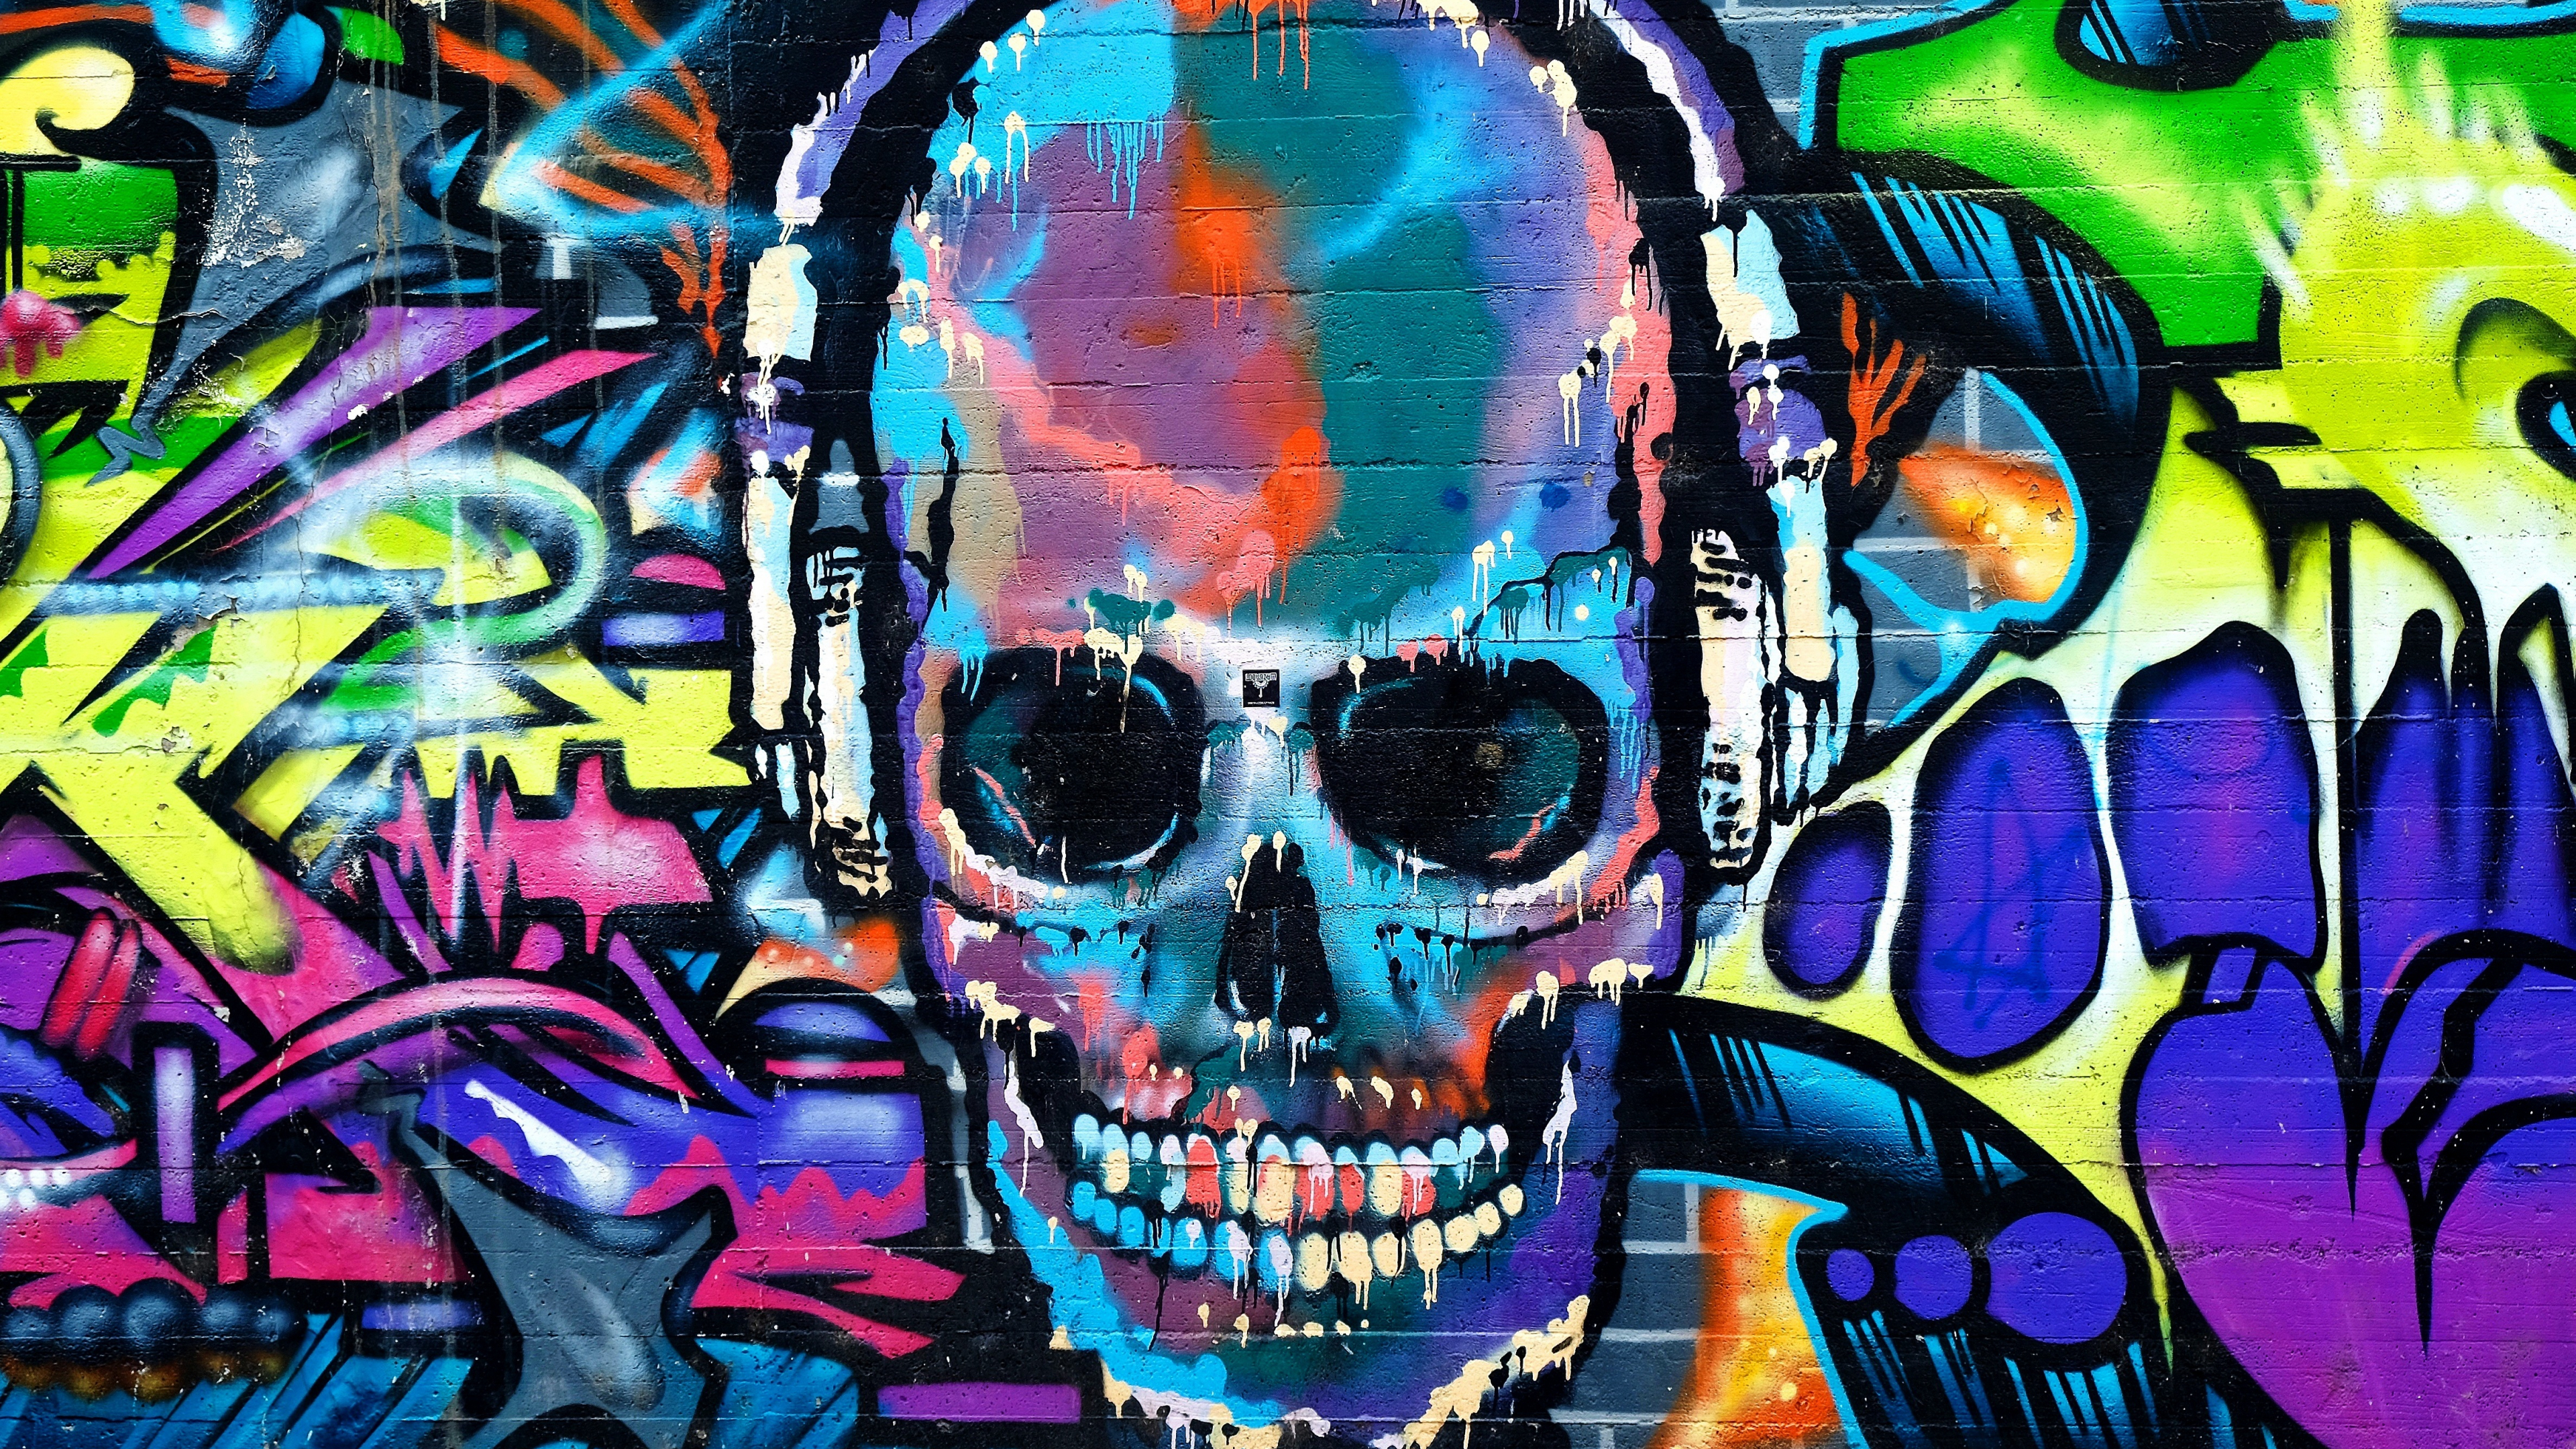 Skull Graffiti Wallpaper 4k 31364 views | 28580 downloads. skull graffiti wallpaper 4k